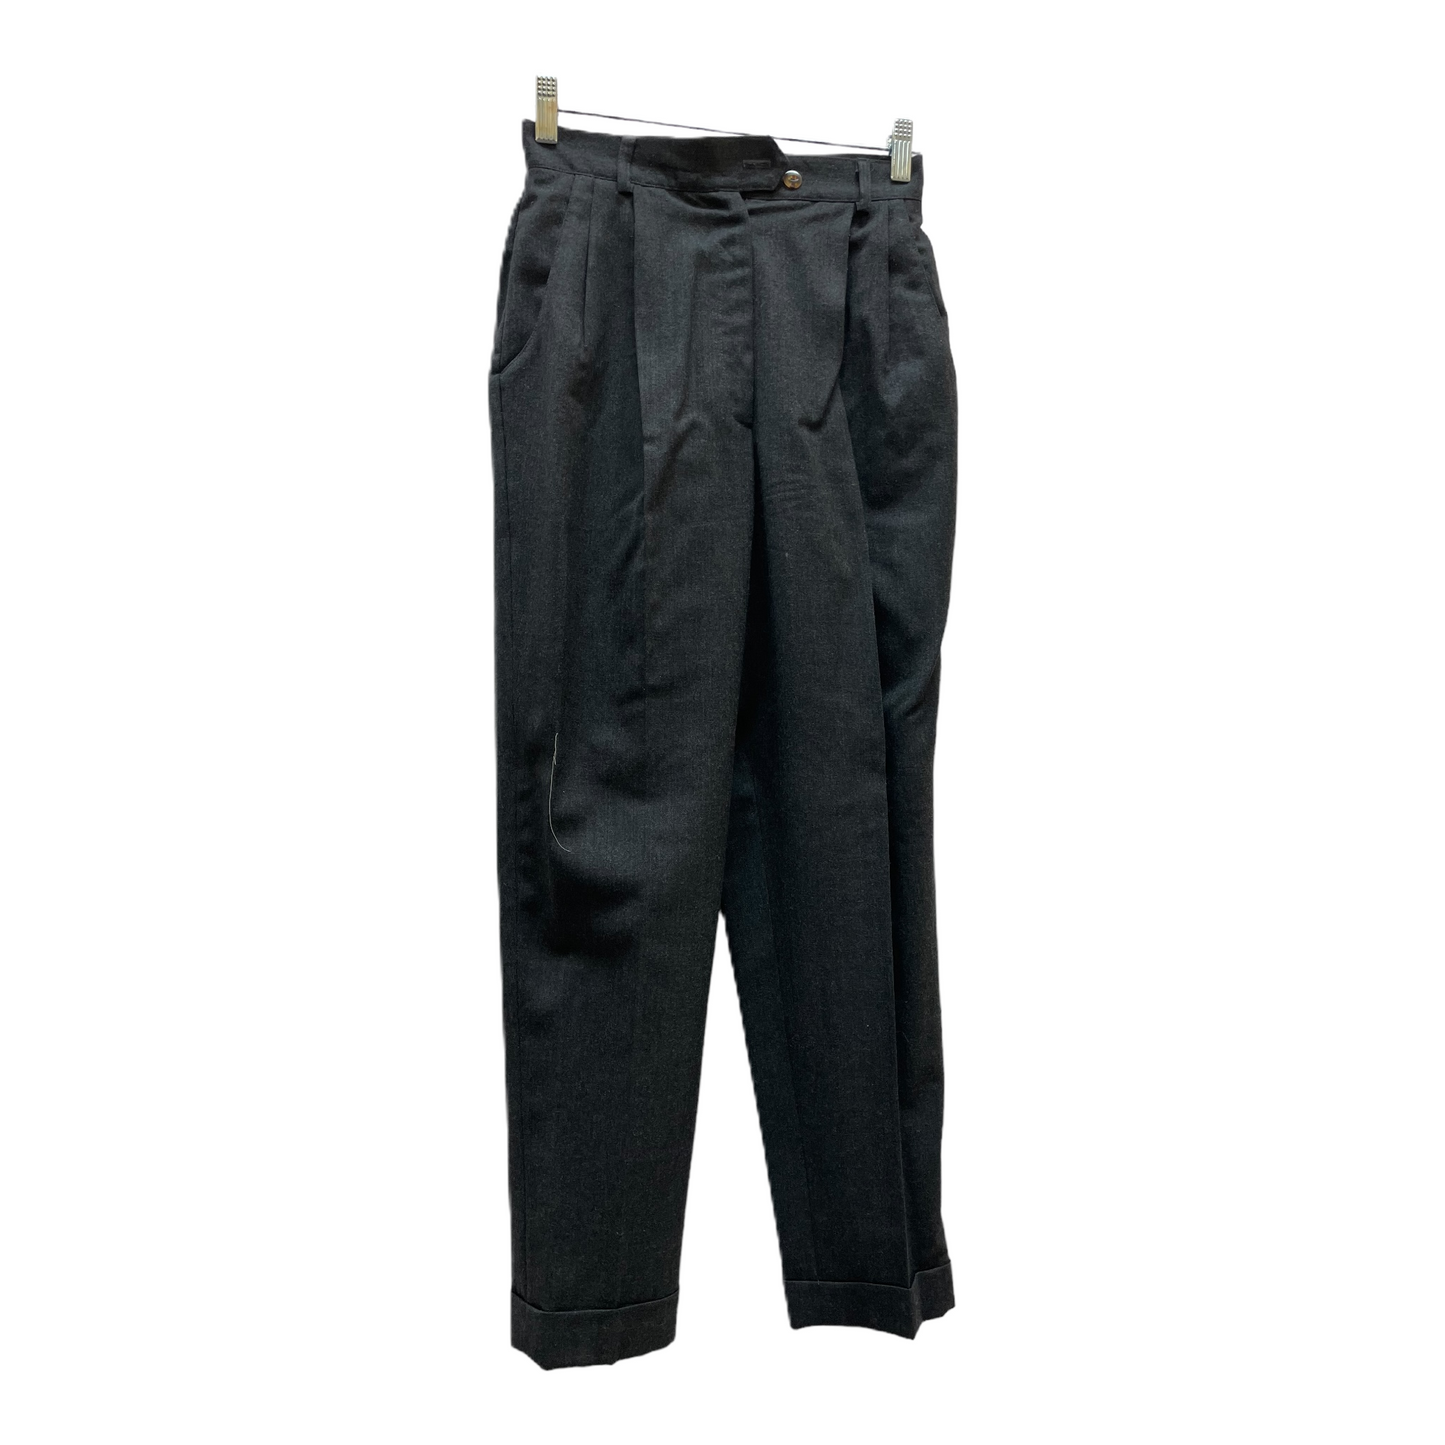 Pants Work/dress By Talbots  Size: 4petite